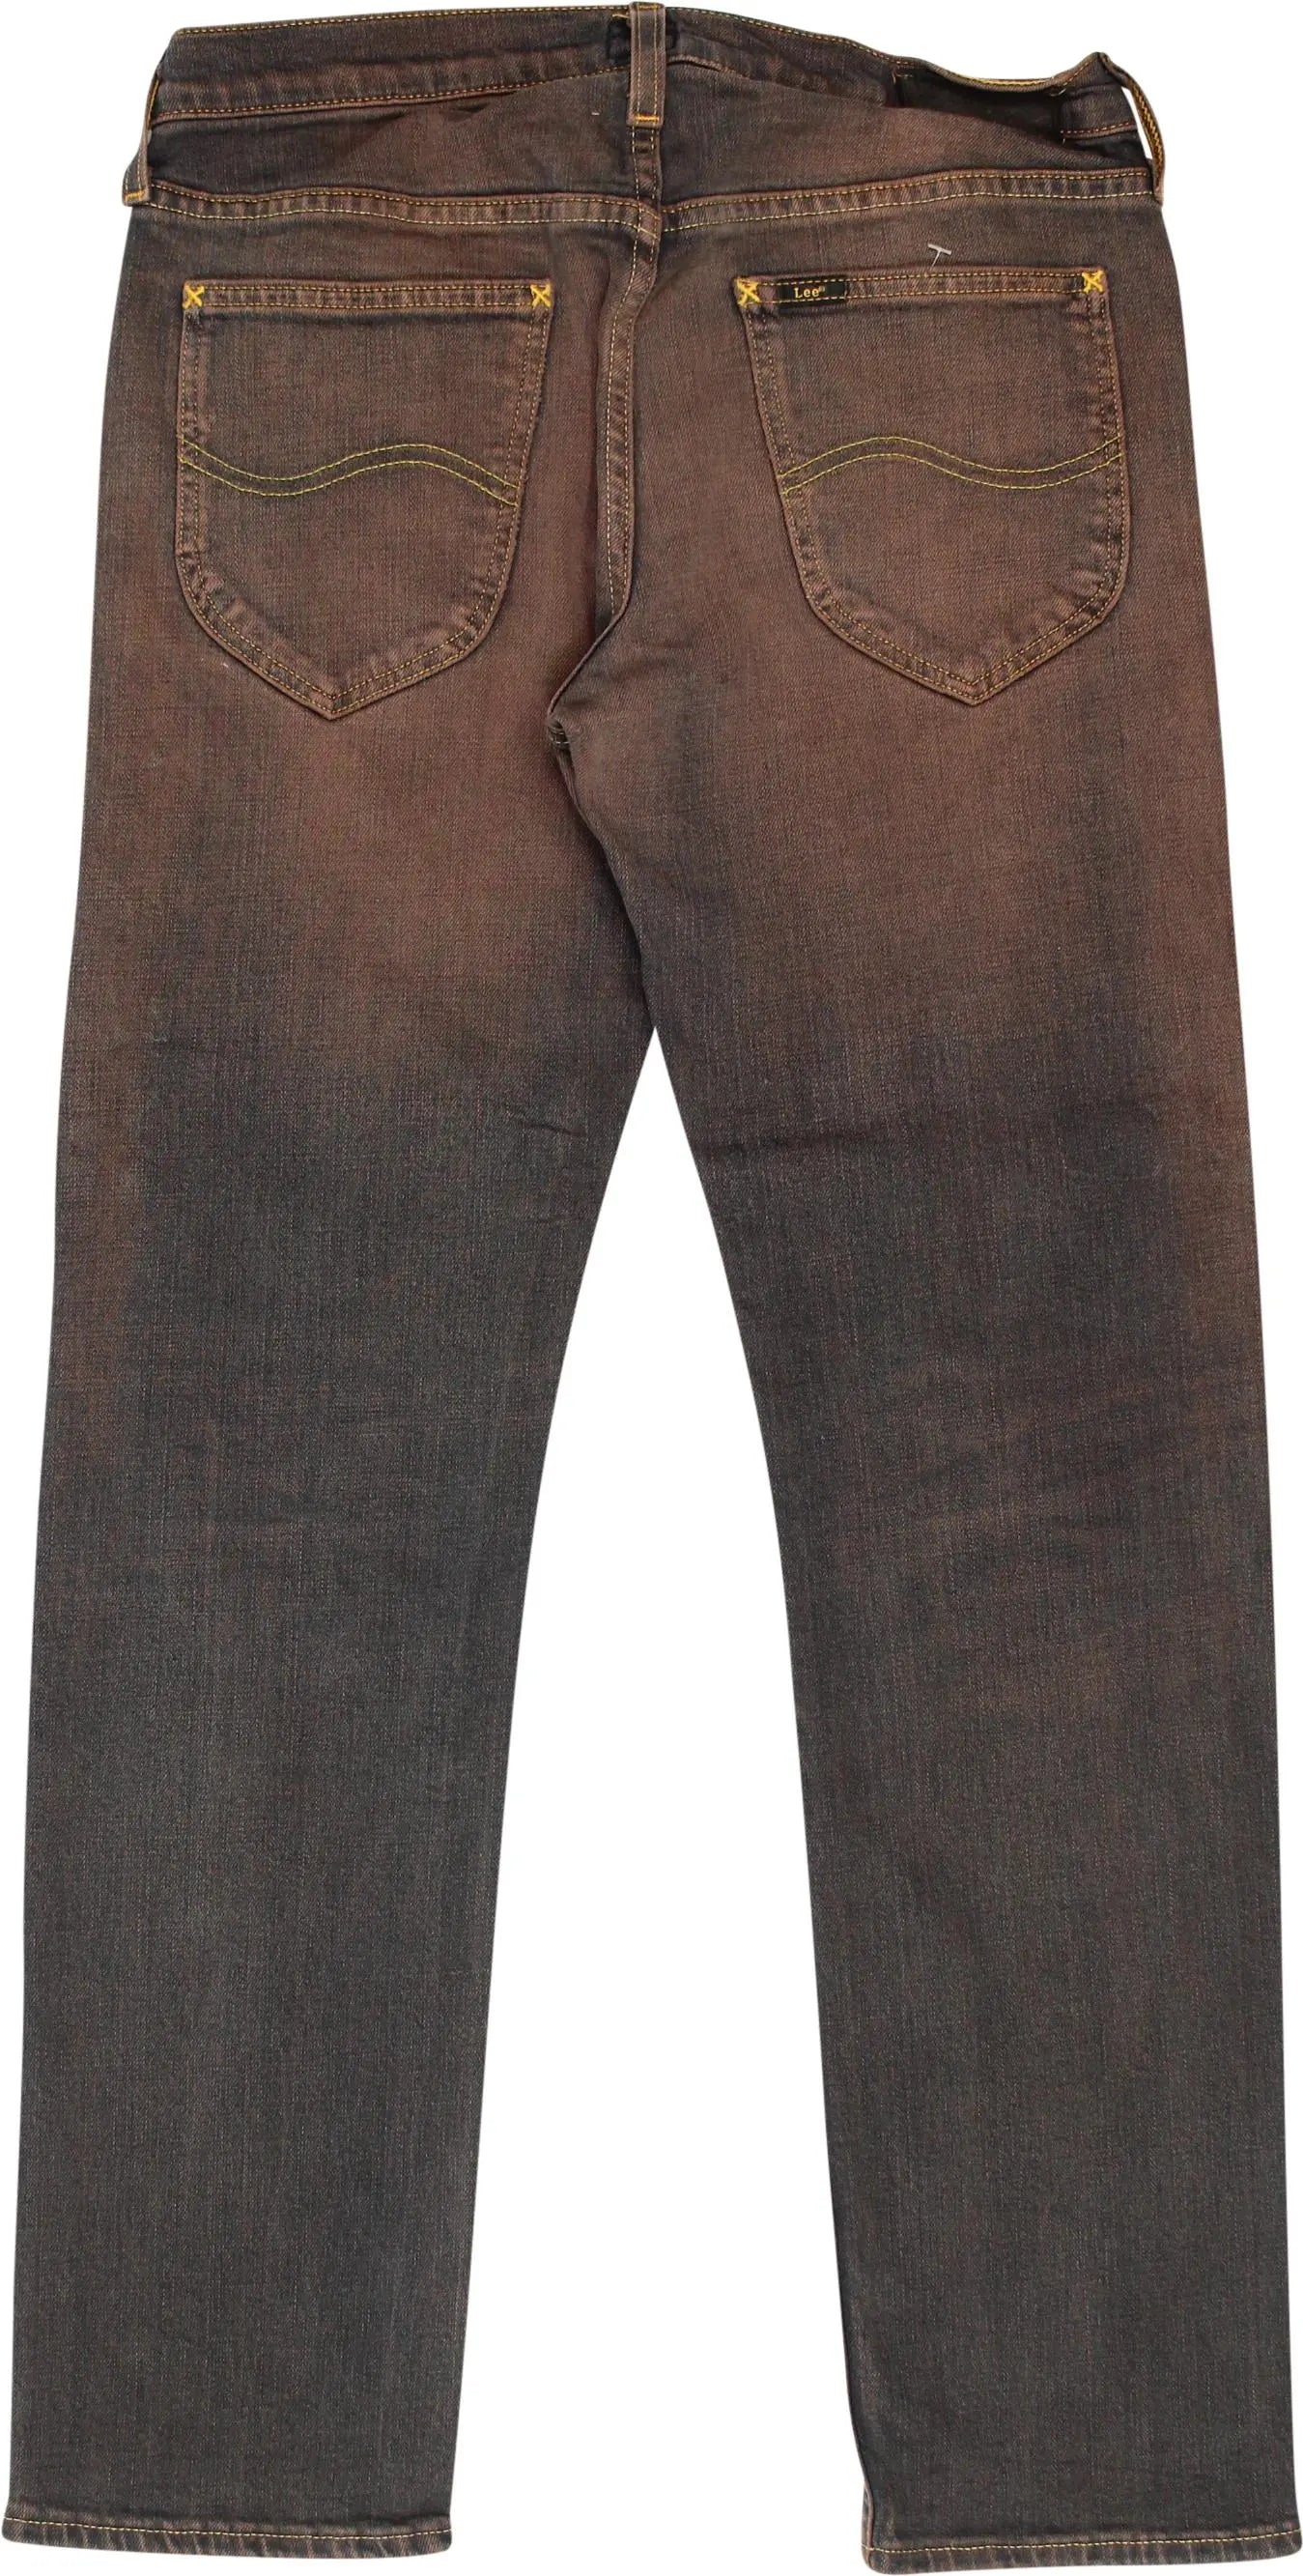 Lee - Lee Daren Slim Fit Jeans- ThriftTale.com - Vintage and second handclothing